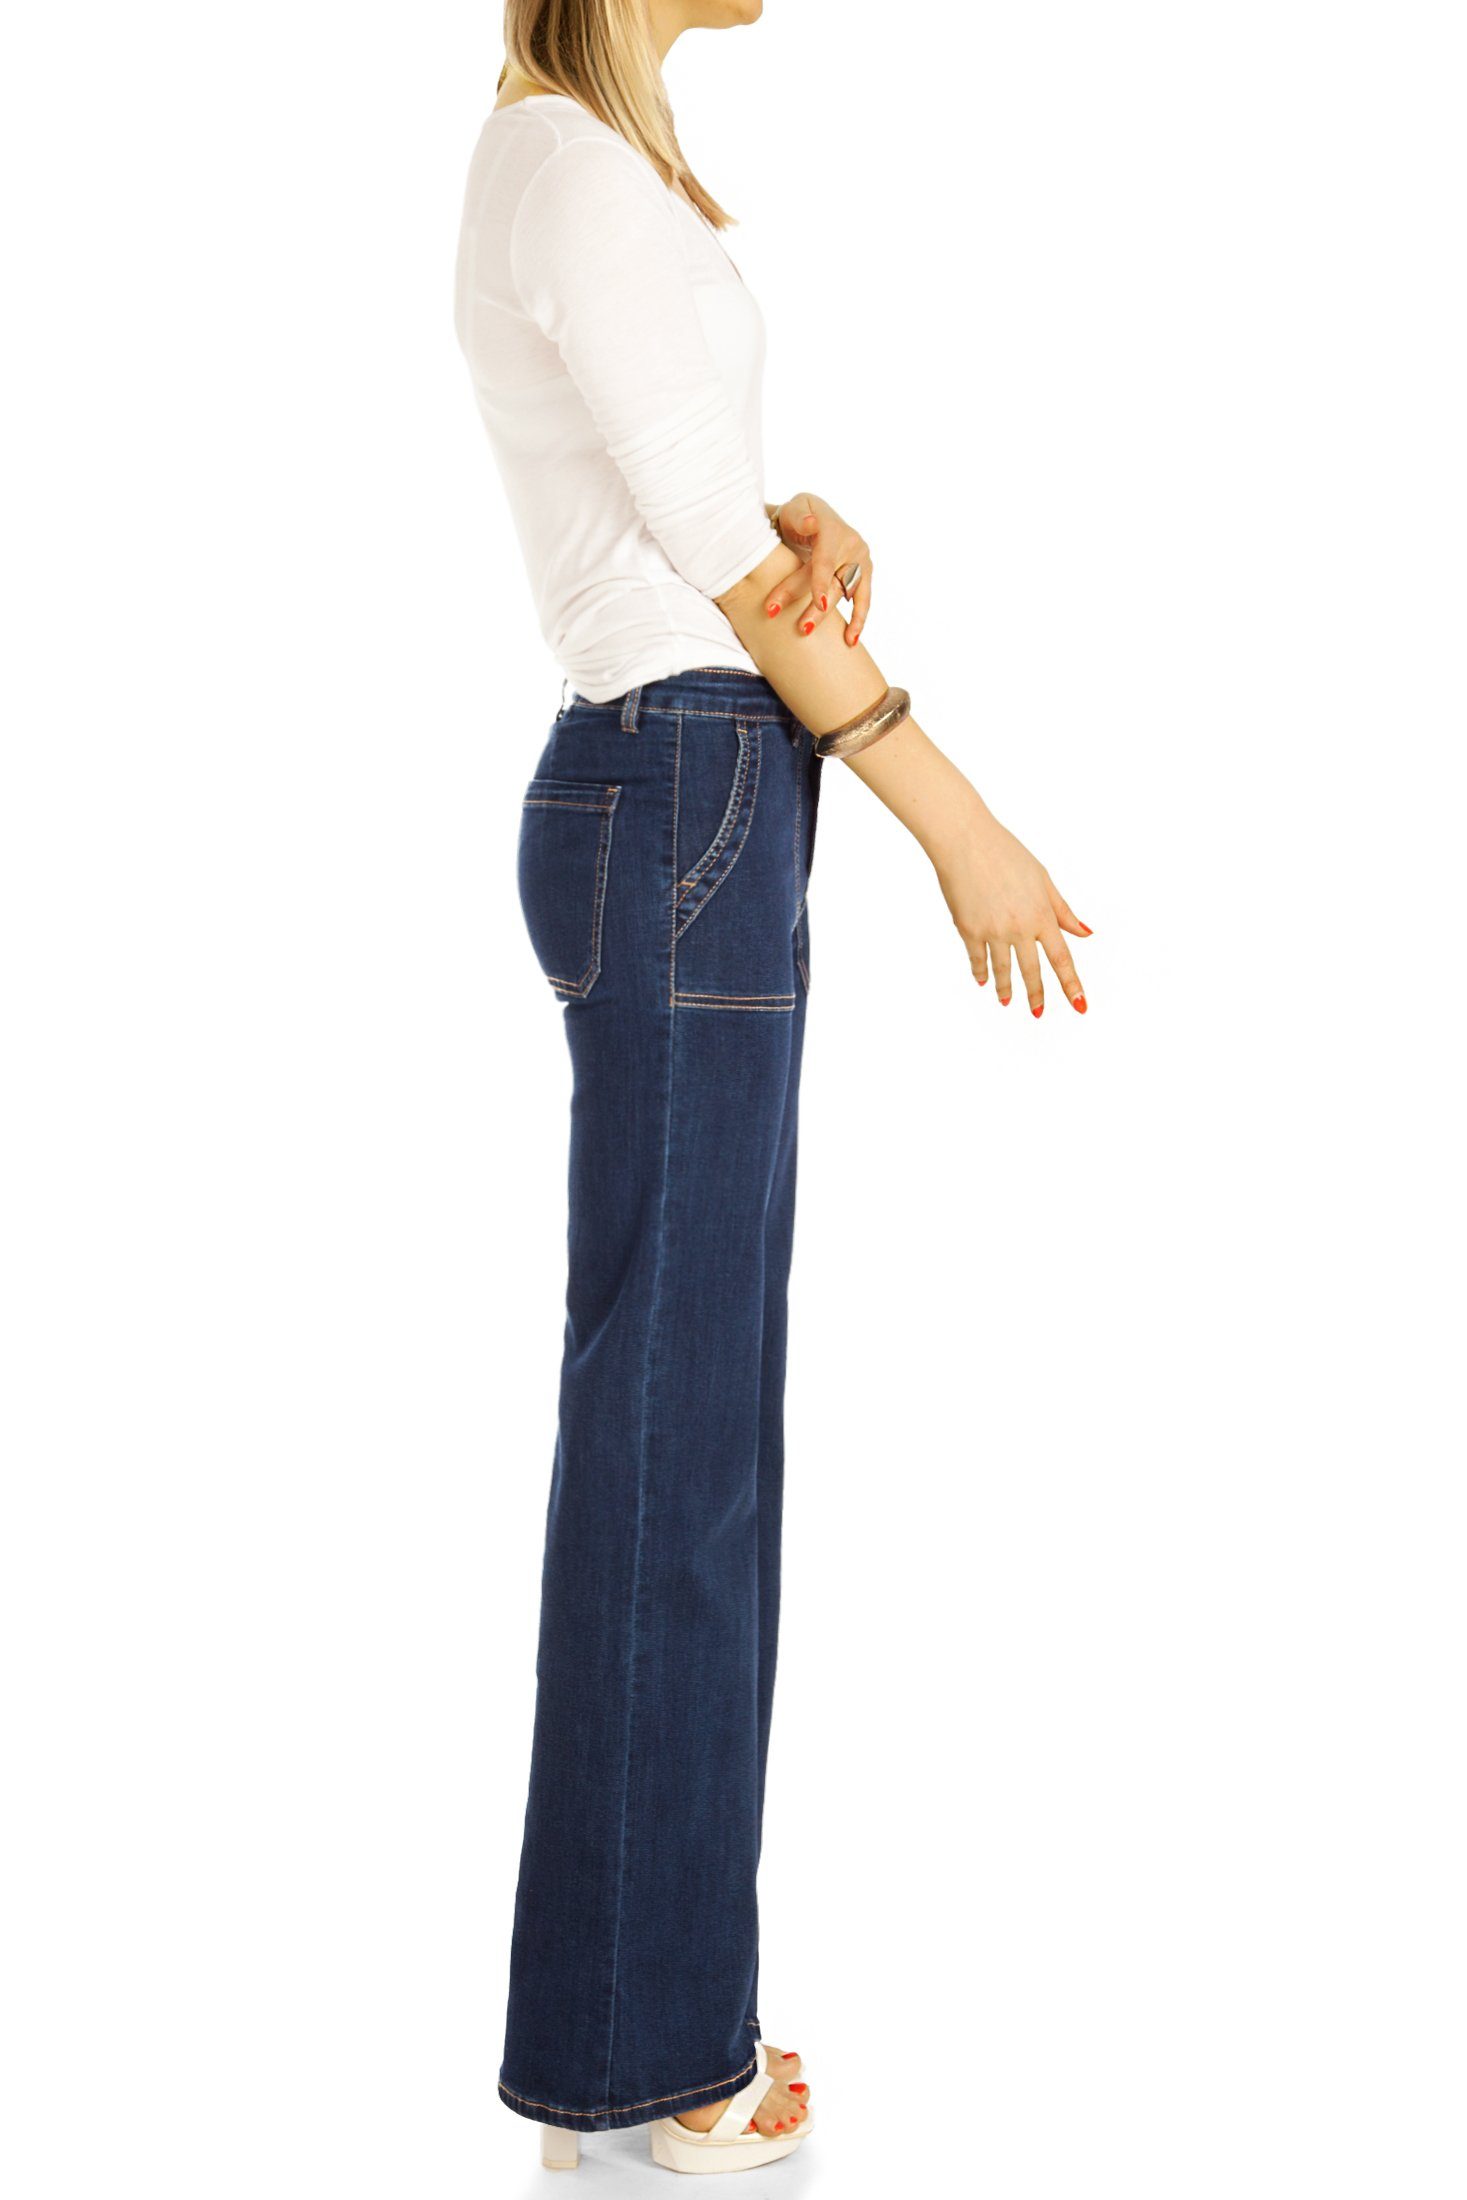 be Passform hellblau styled Bootcut medium Jeans, - Damen Stretch-Anteil, - waist j31k mit 5-Pocket-Style straight Bootcut-Jeans Hosen